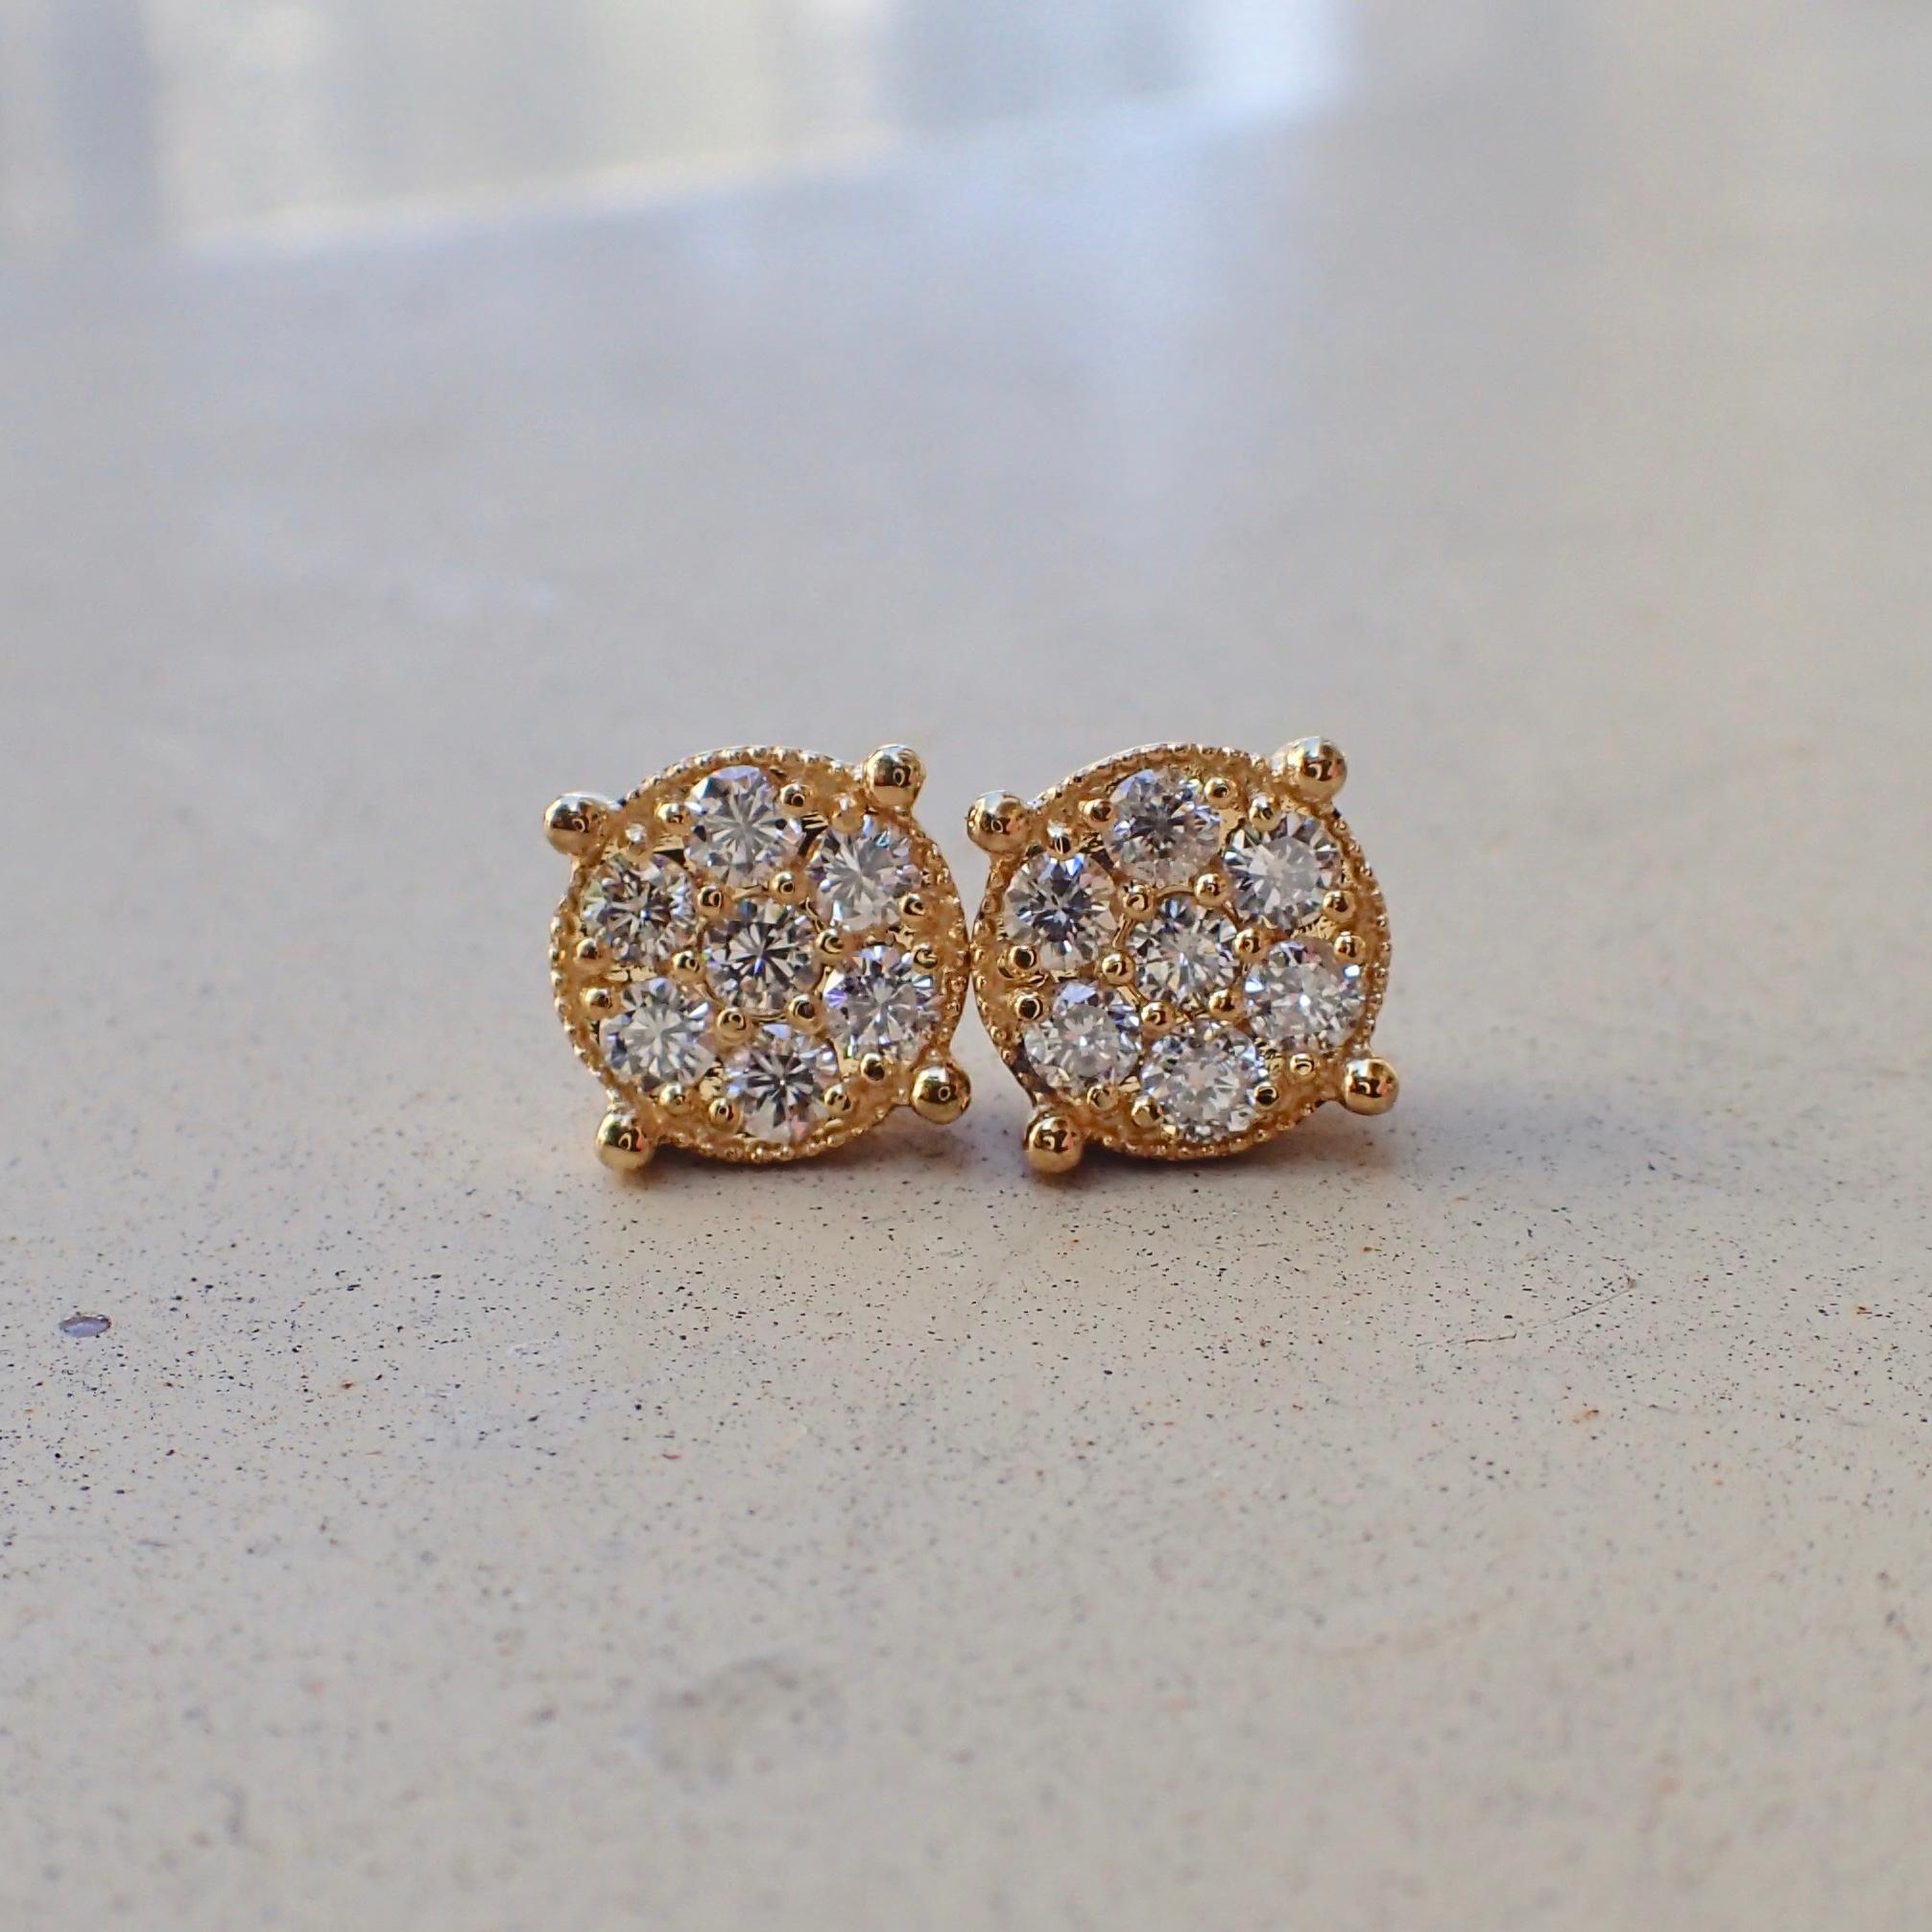 Contemporary 18 Karat Gold Stud Earrings are Set with 0.68 Carat of Diamond, Illusion Set